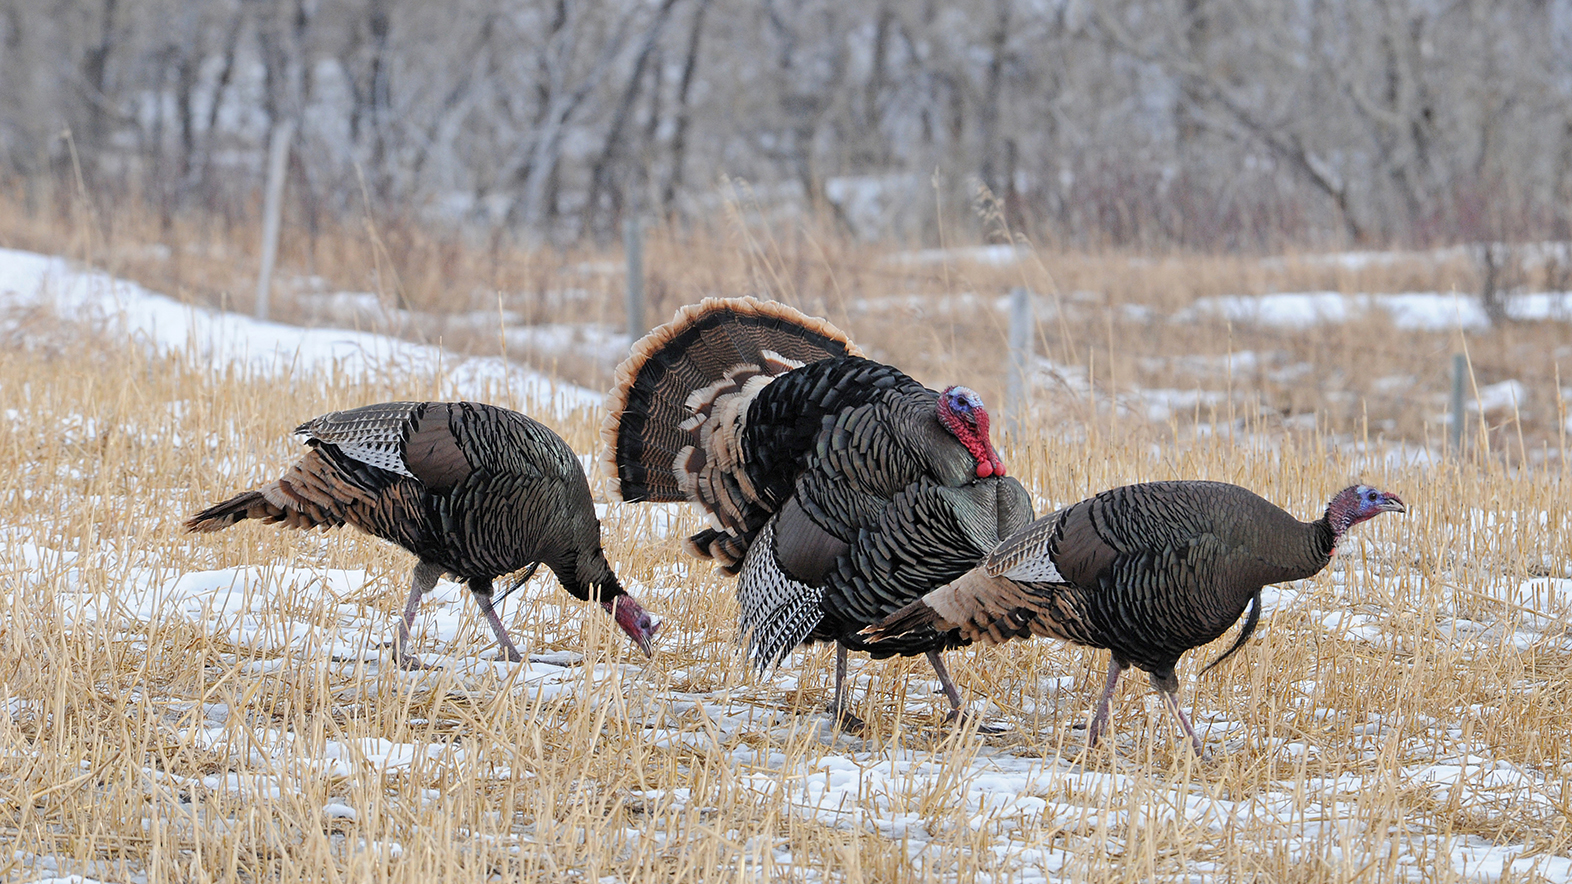 husker-led-study-to-focus-on-nebraska-s-wild-turkey-populations-nebraska-today-university-of